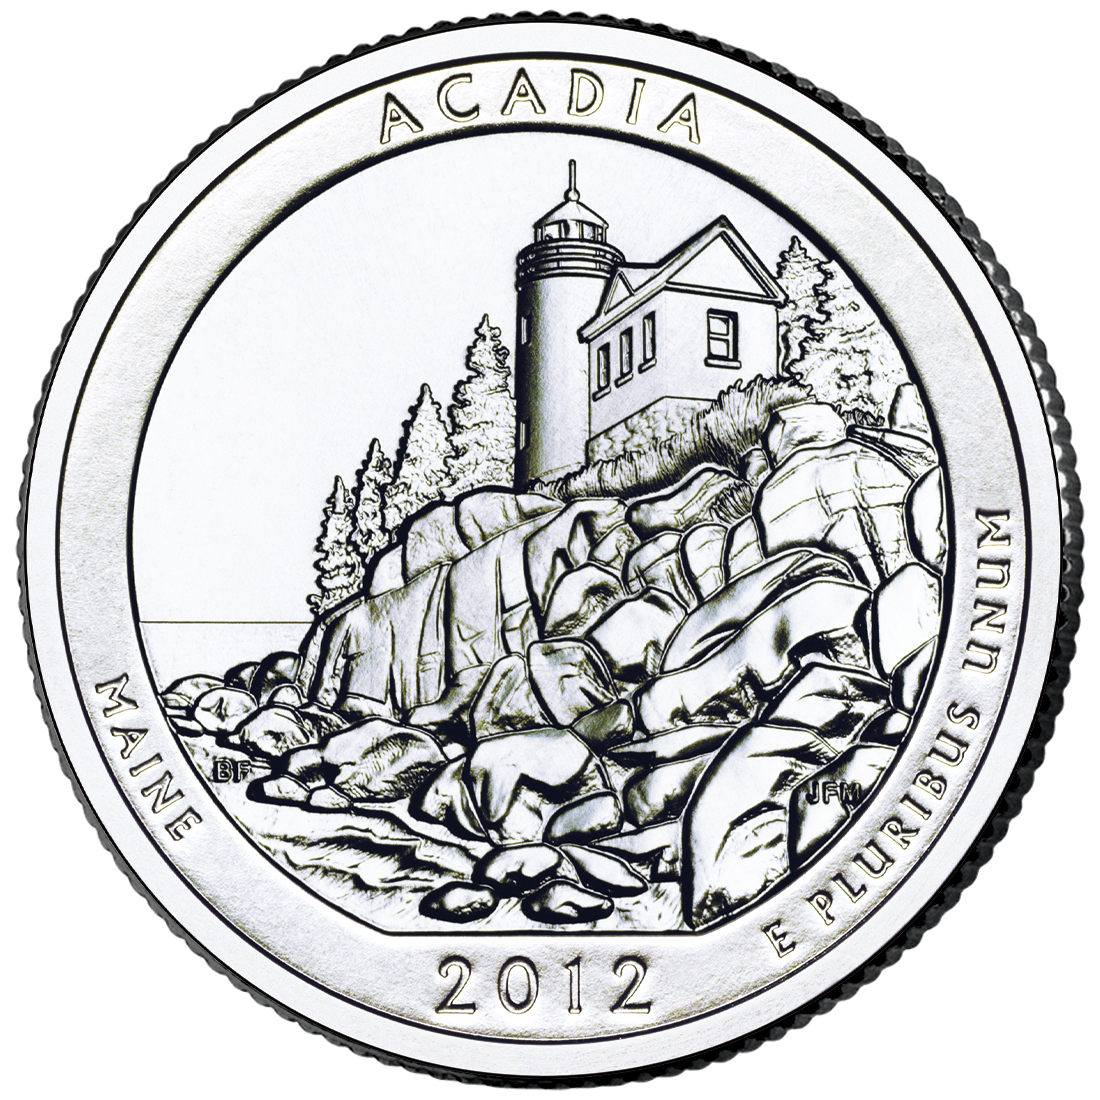 2012 Acadia National Park